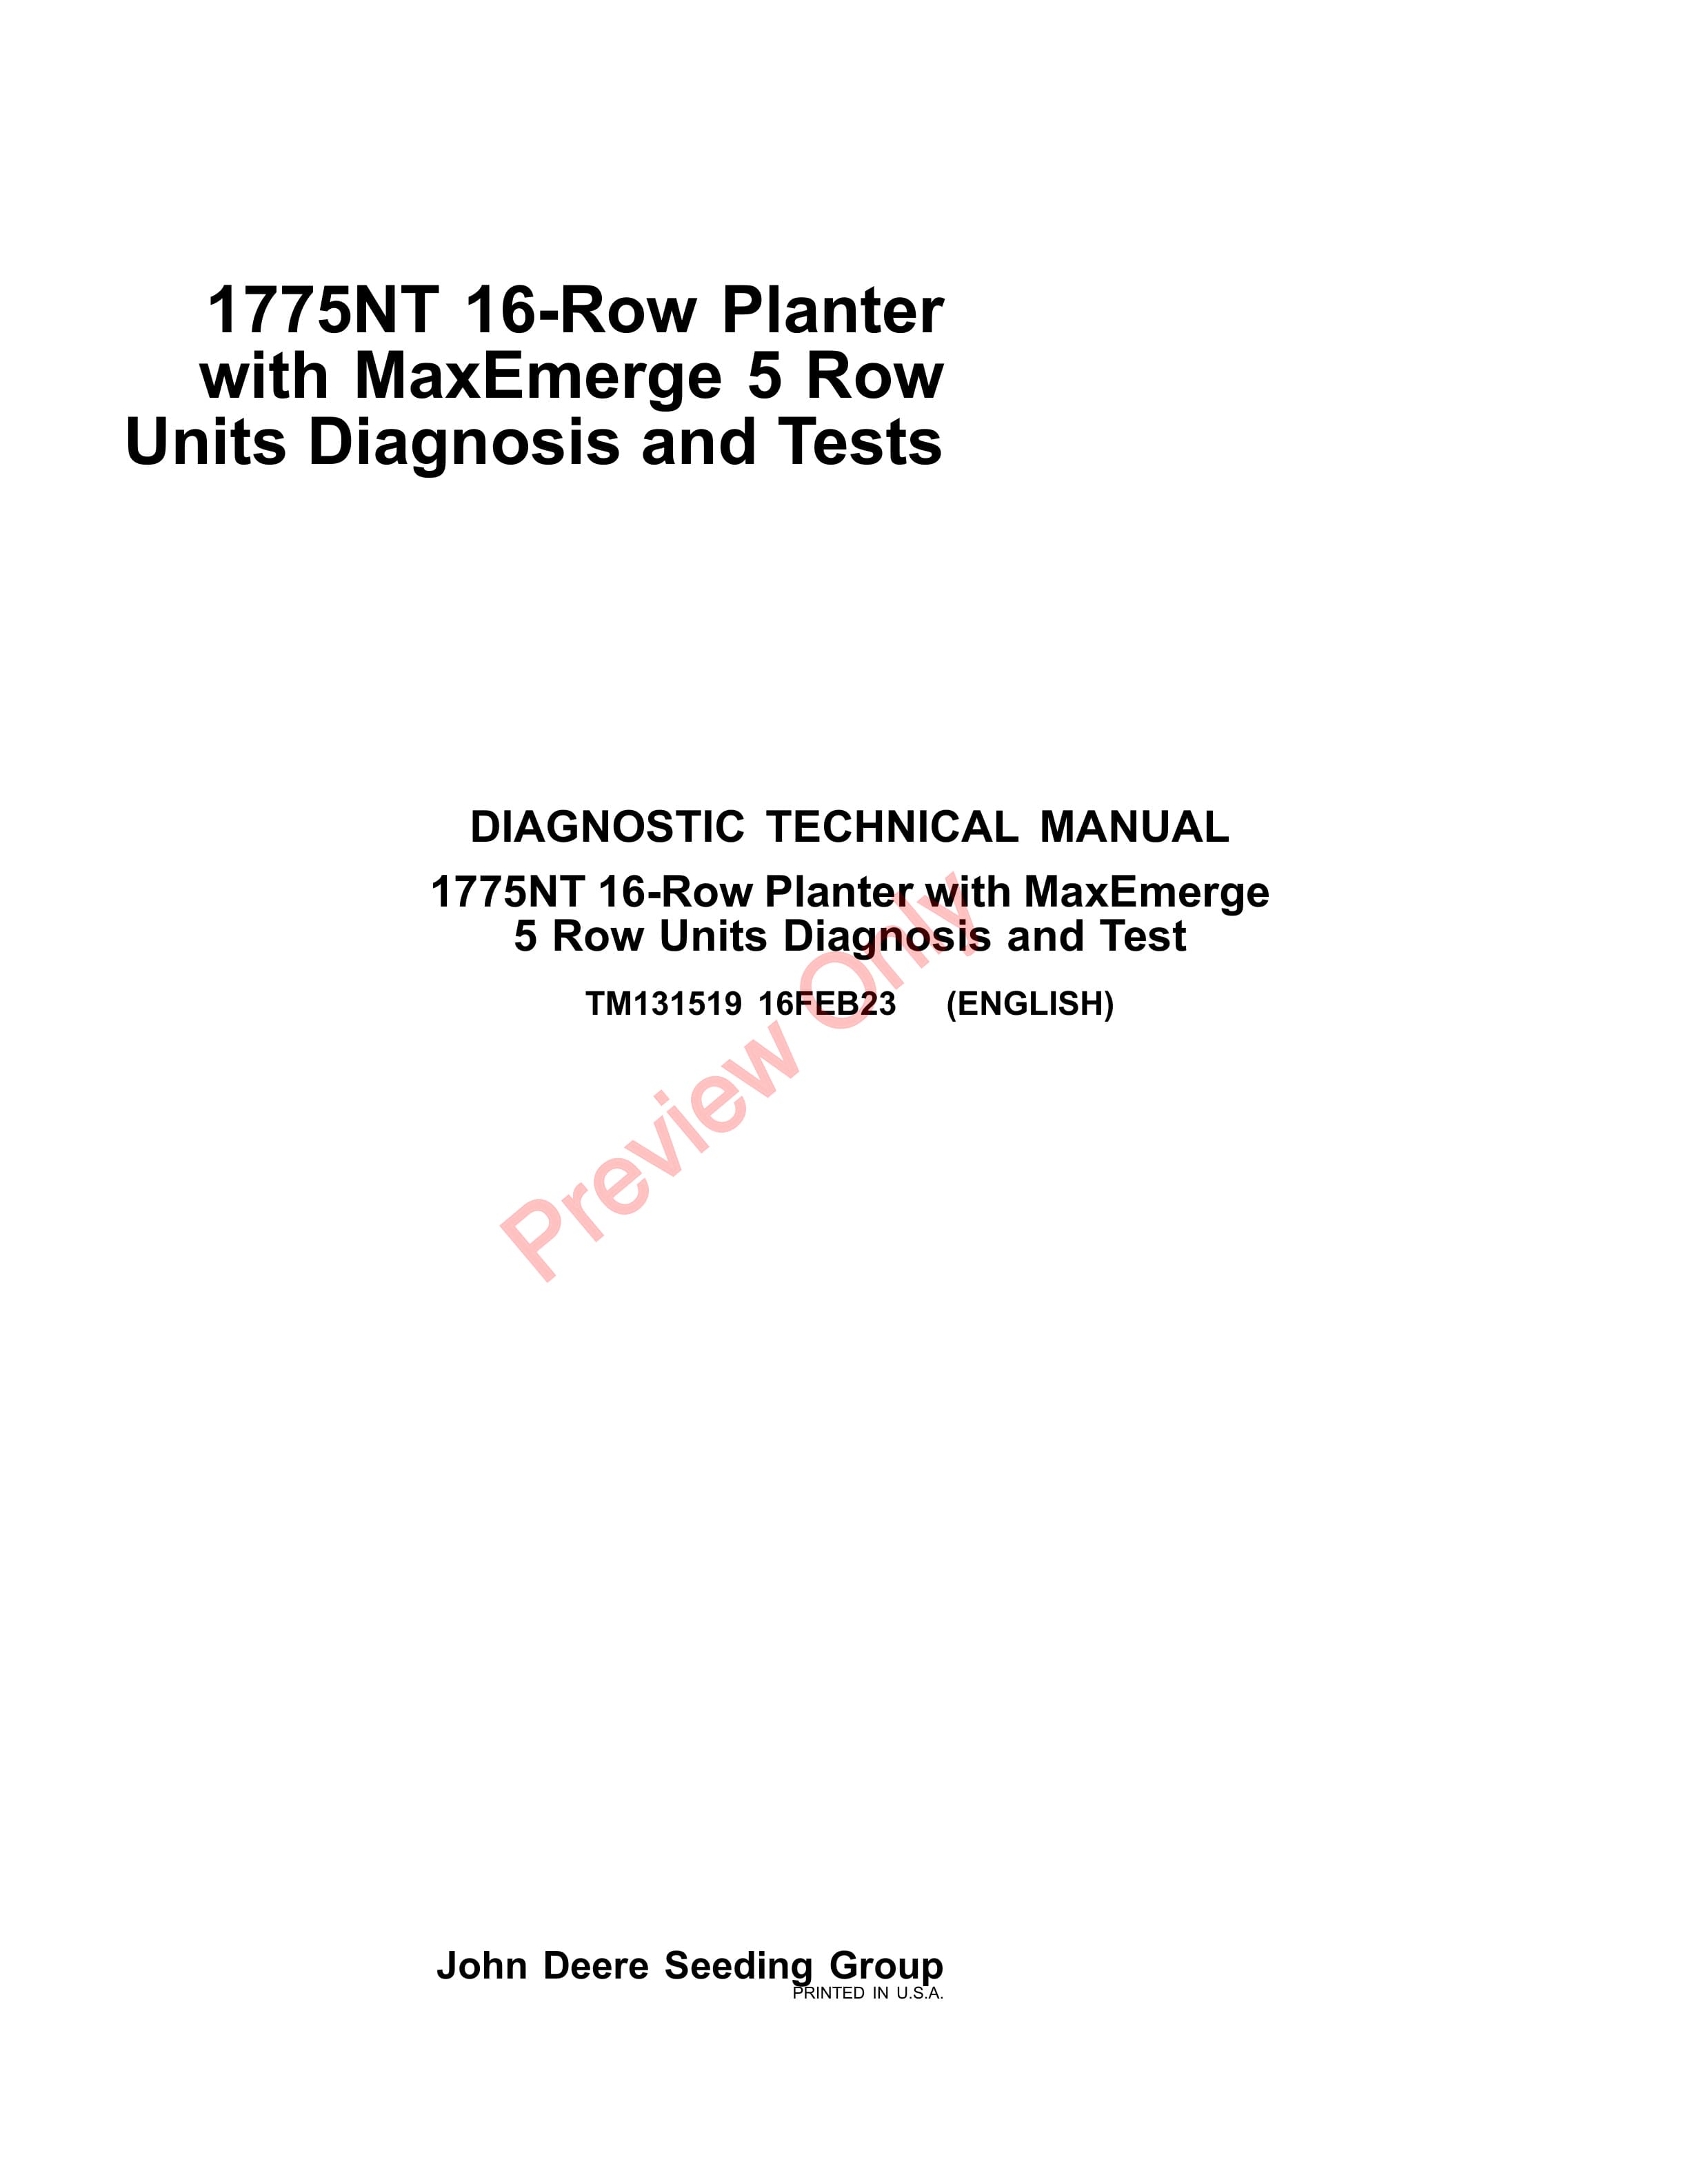 John Deere 1775NT 16 Row Planters wMaxEmerge 5 Row Units Diagnostic Technical Manual TM131519 16FEB23 1